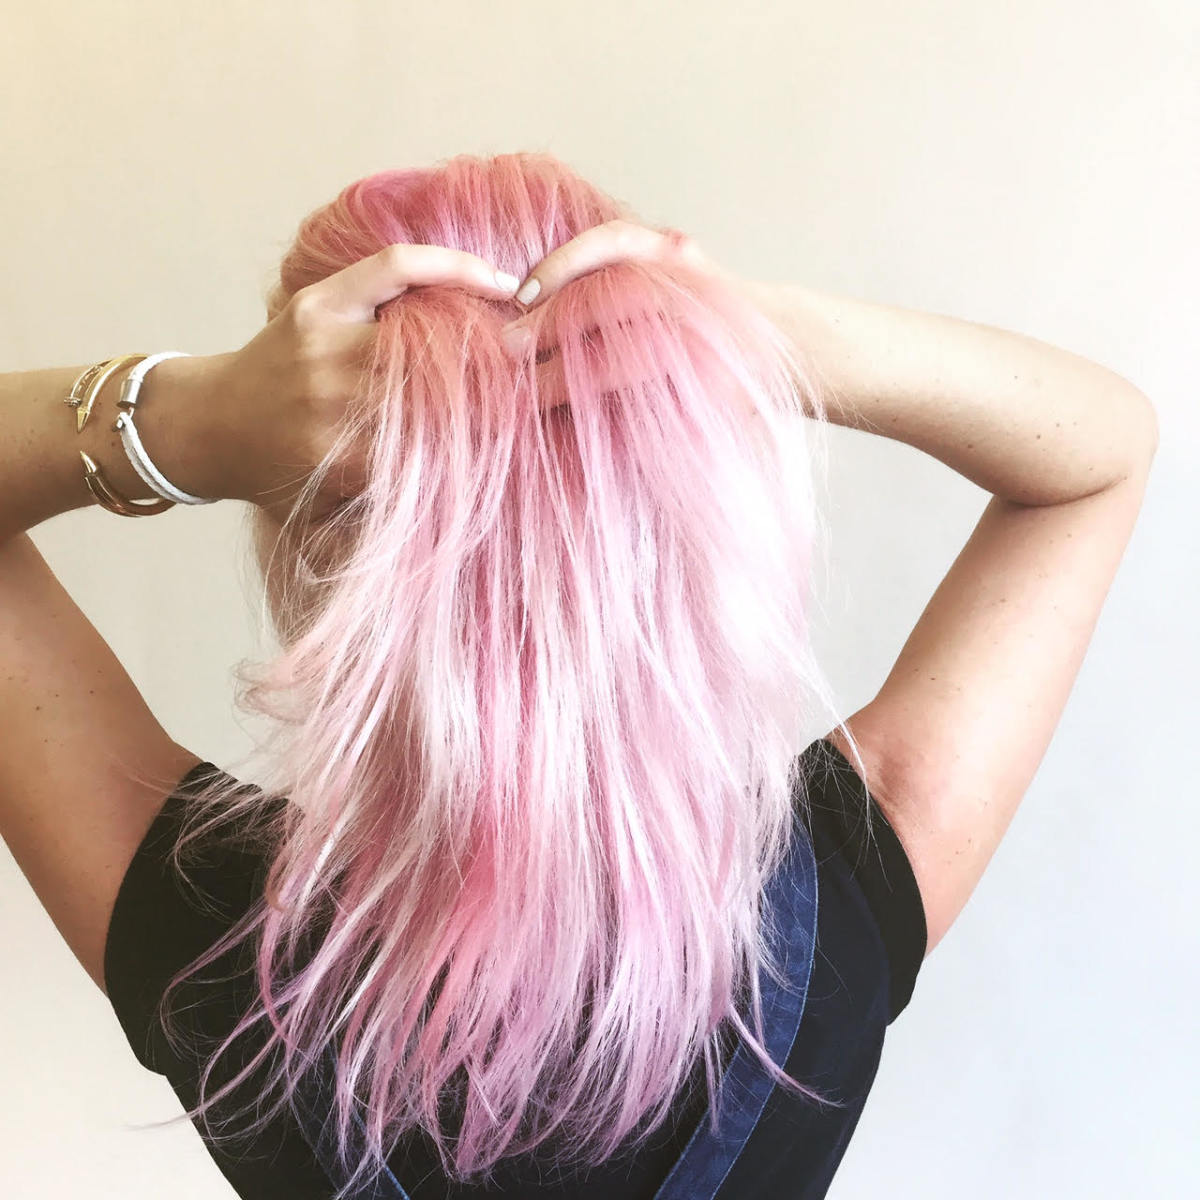 The author with pink hair. Photo: Rachel Adler